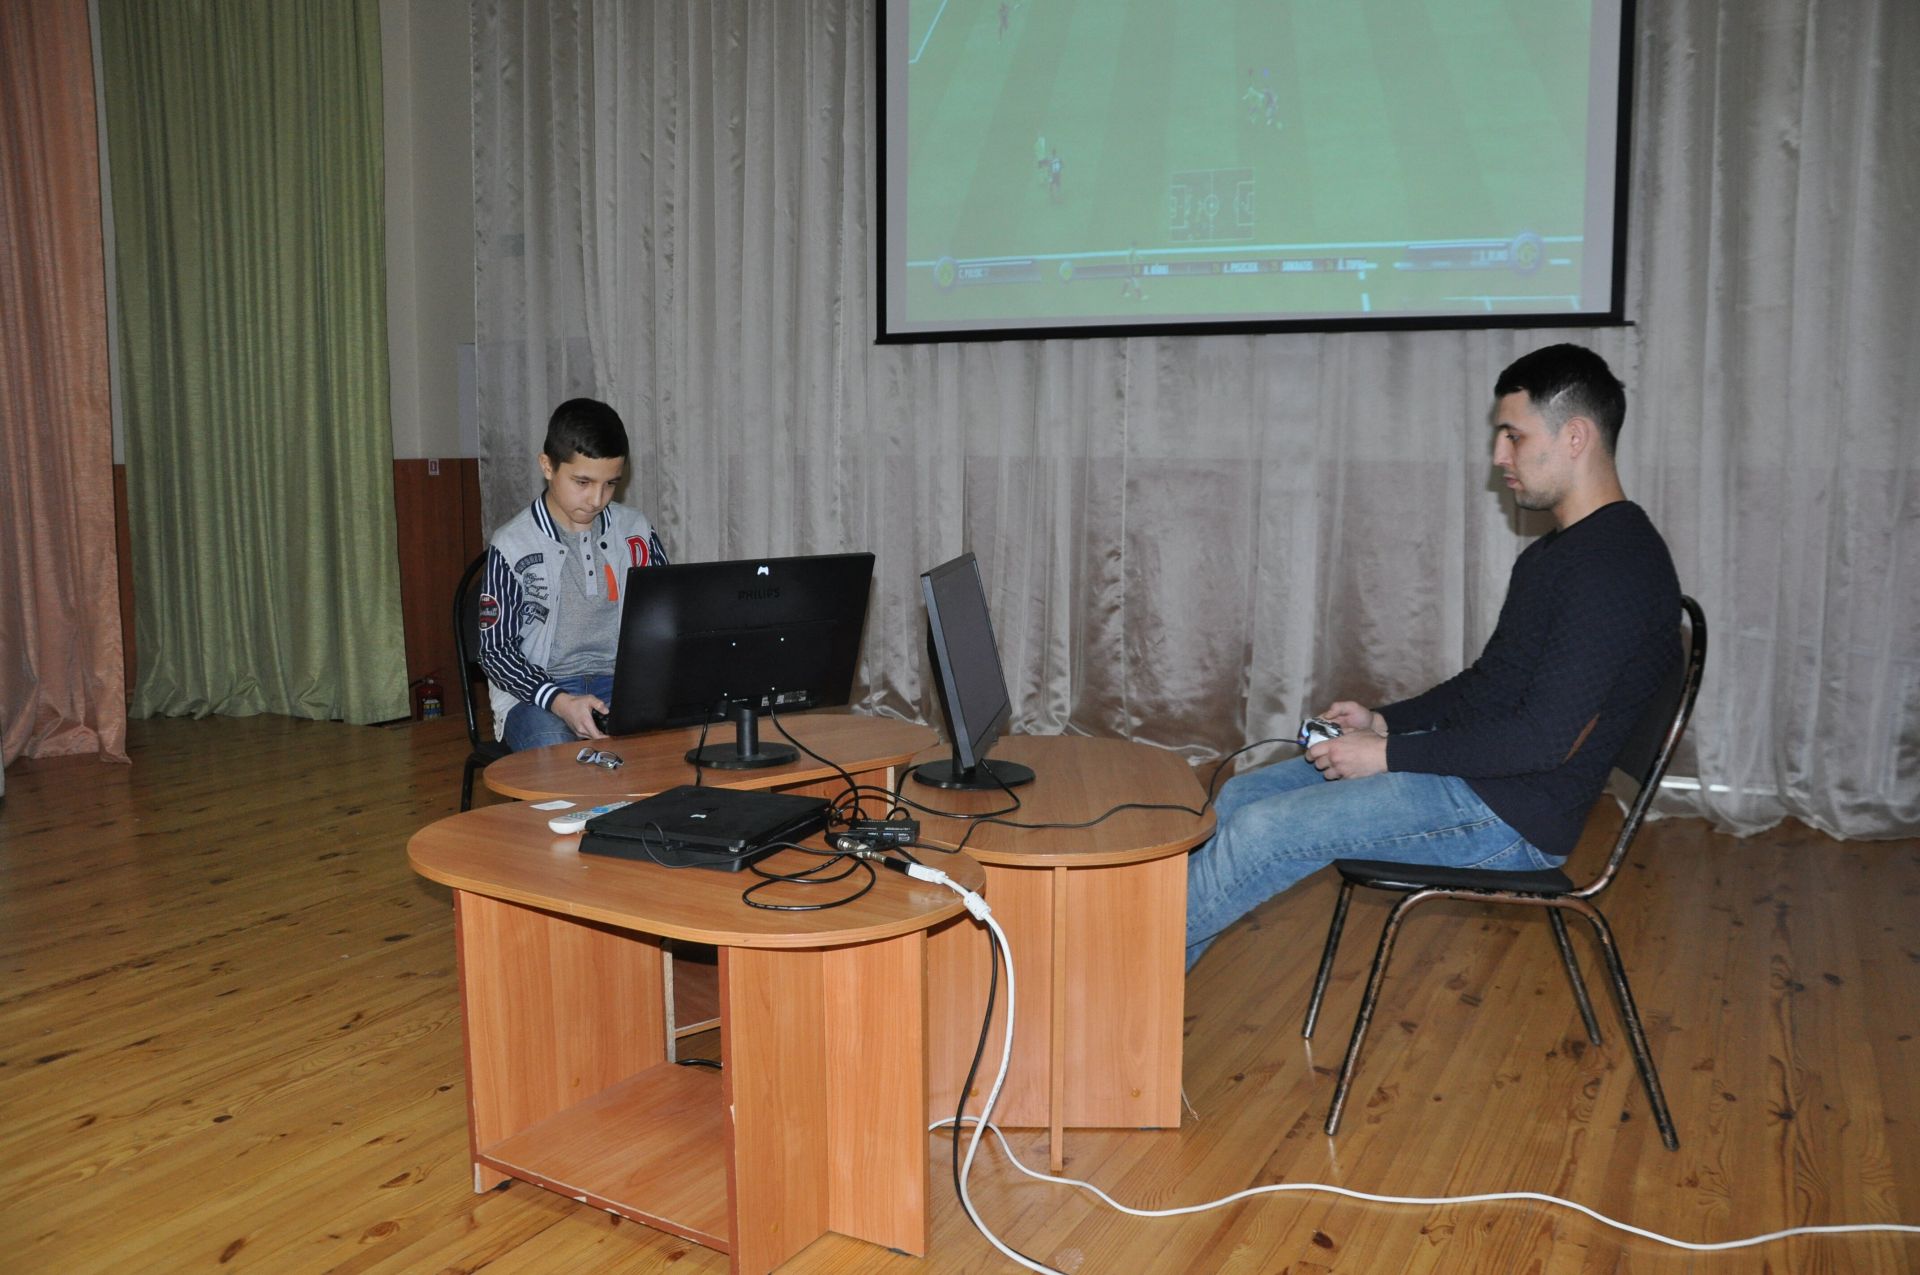 Новогодний  турнир по киберфутболу среди молодежи района